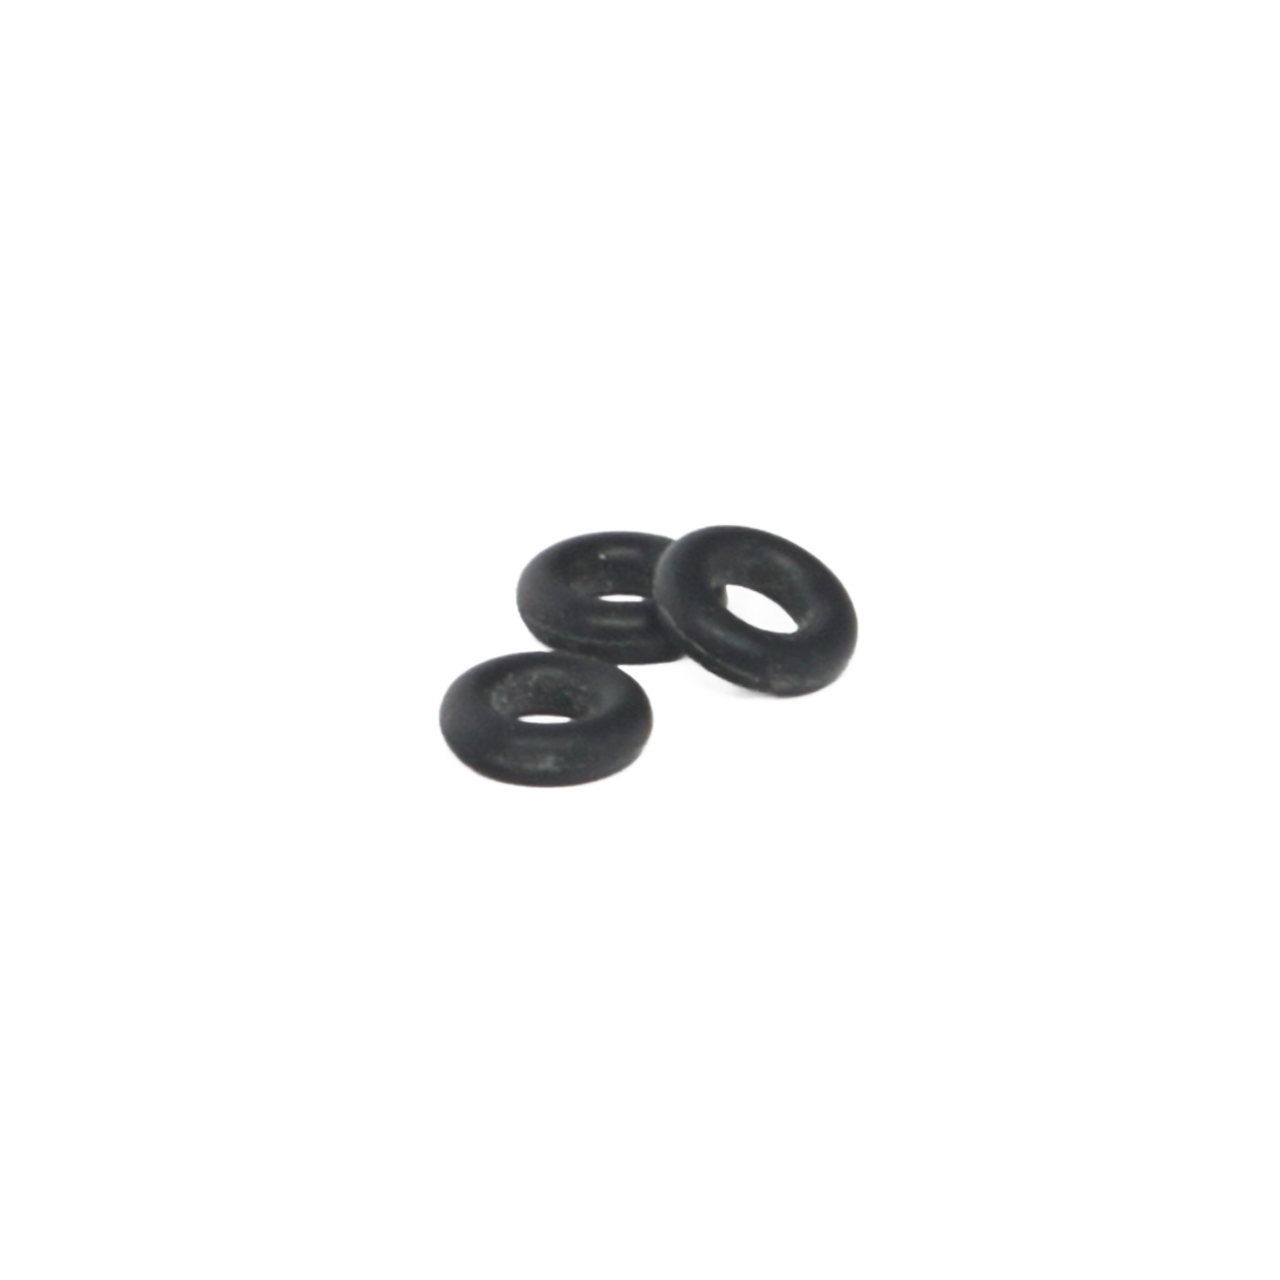 P2184 - 4 mm Rubber O-ring for Soap Valve AquaDesign/Intersan